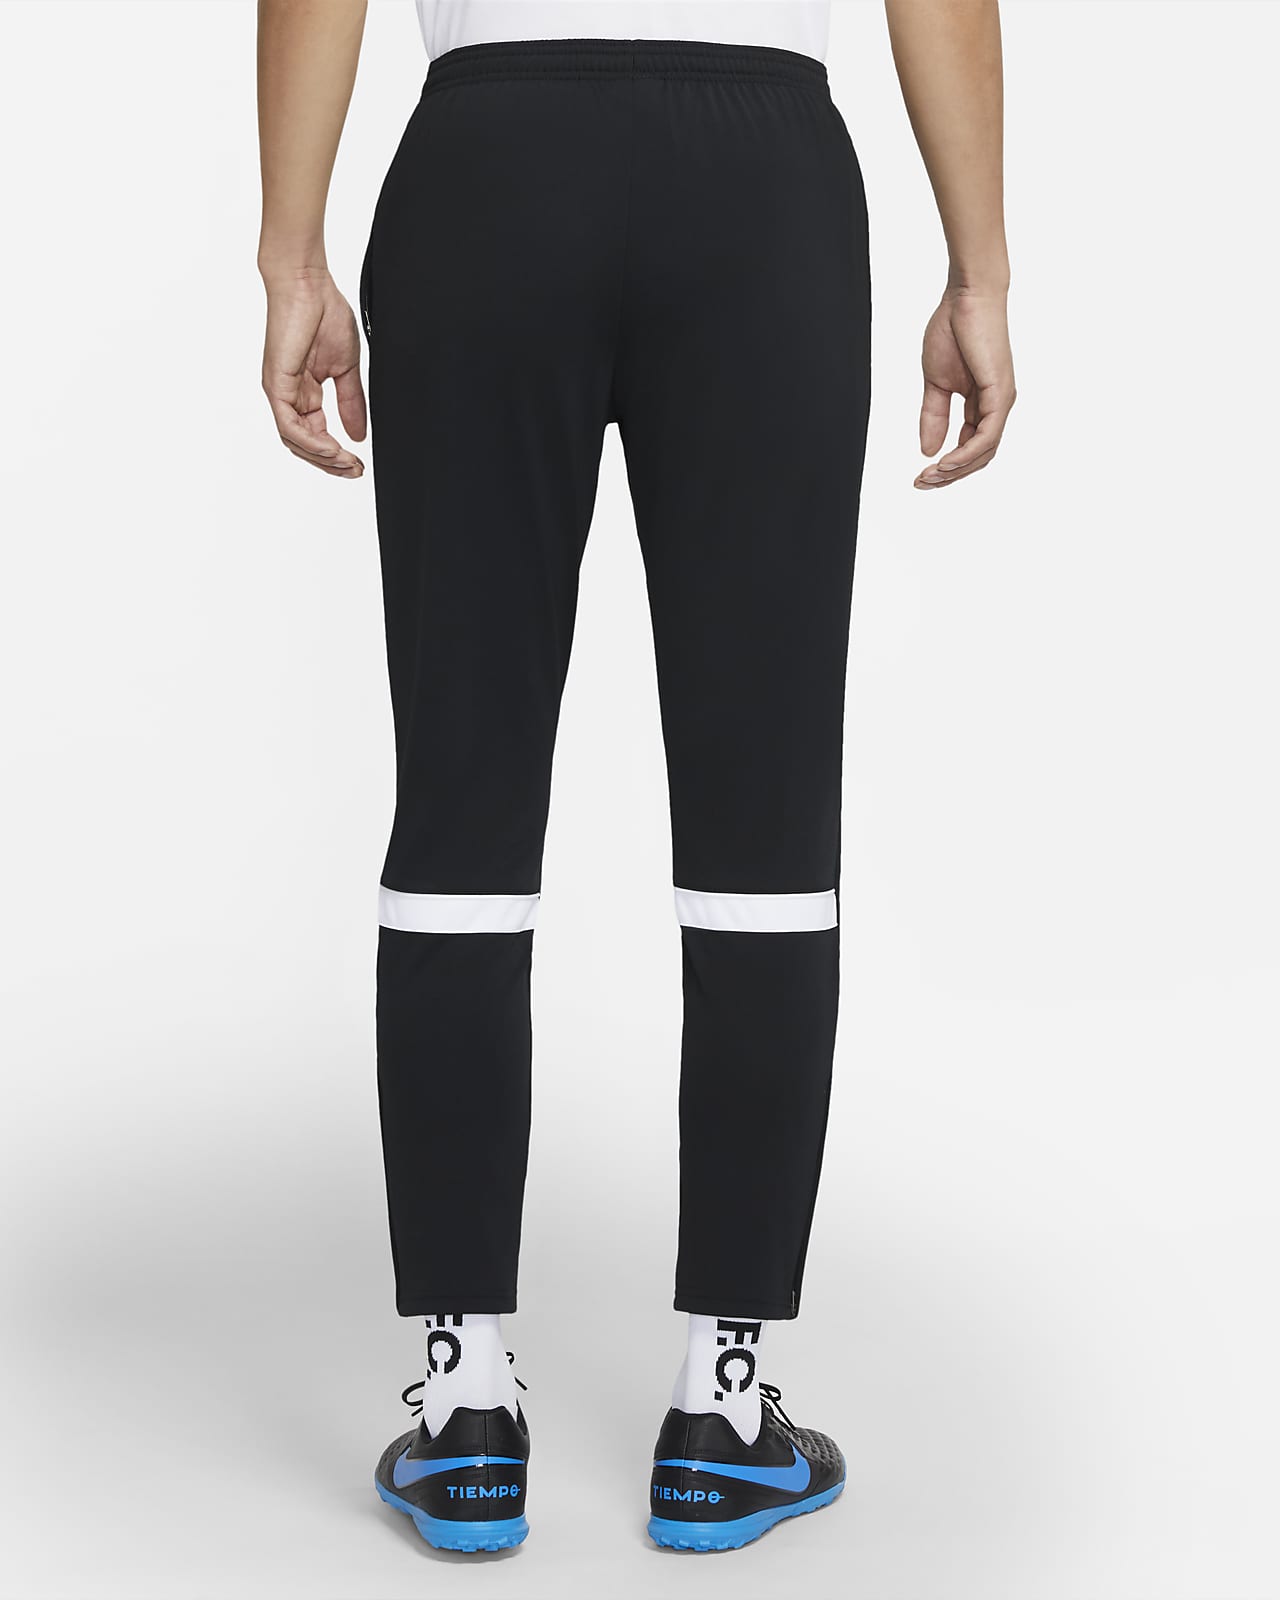 Nike Dri-FIT Academy Pant (Black / White)